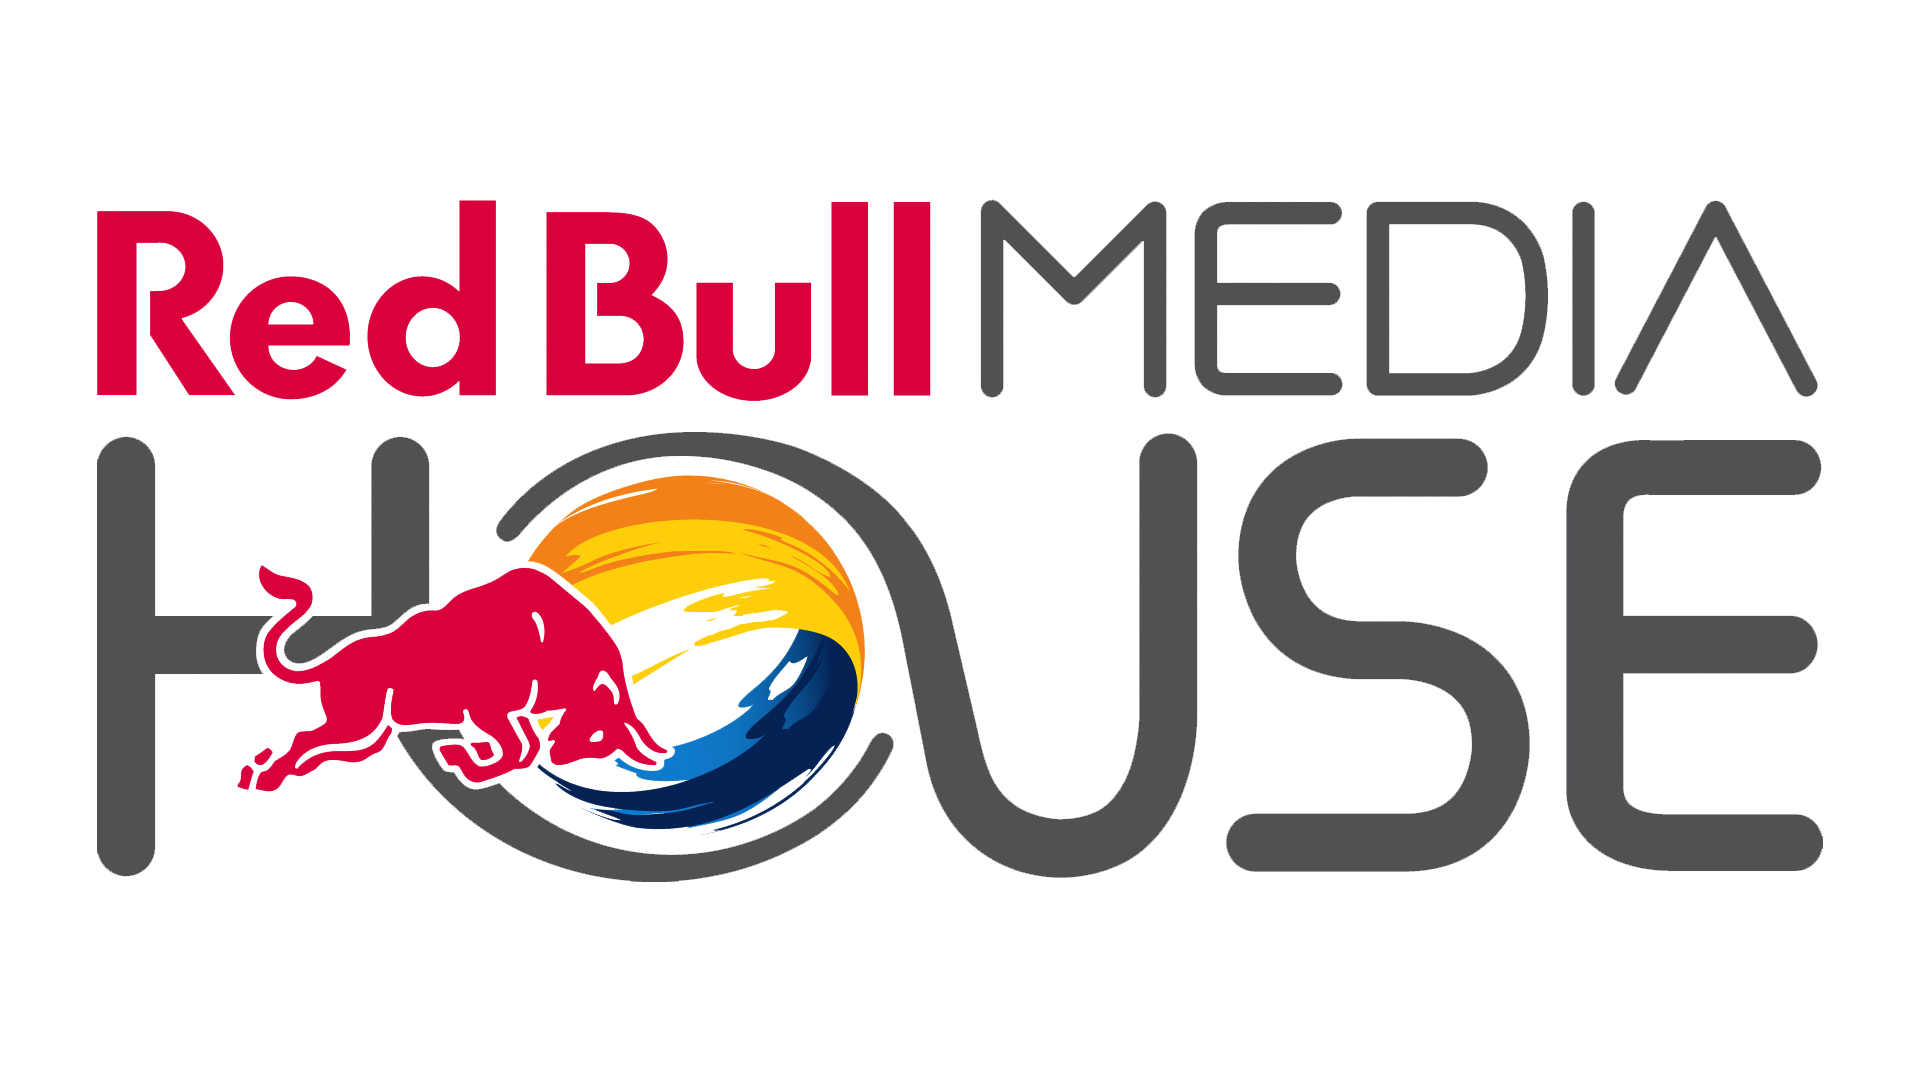 favpng_logo-red-bull-media-house-red-bull-gmbh-brand.png